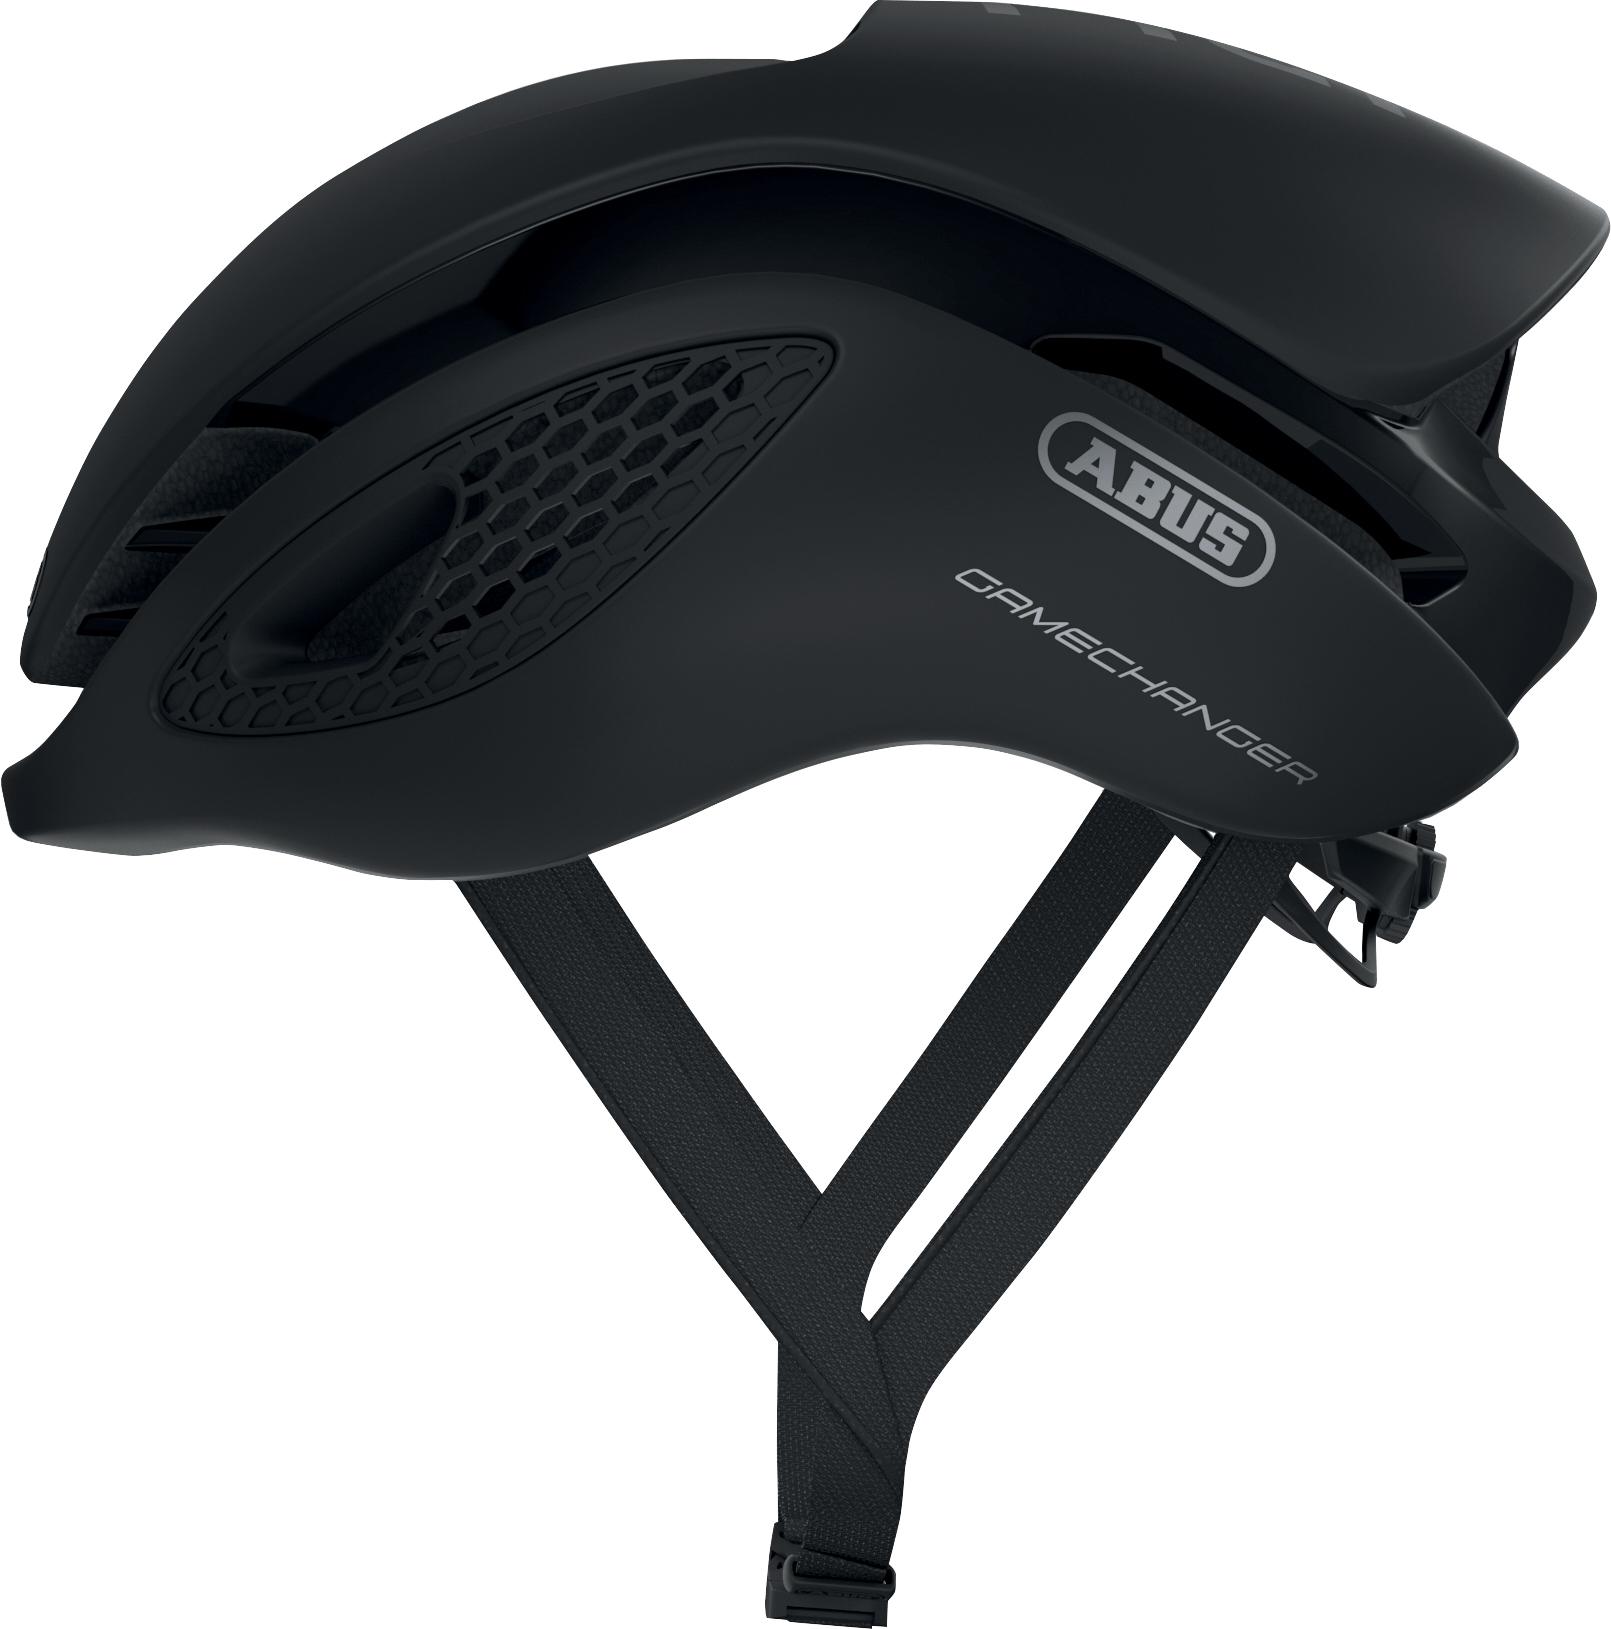 Abus Gamechanger Road Cycling Helmet - Black